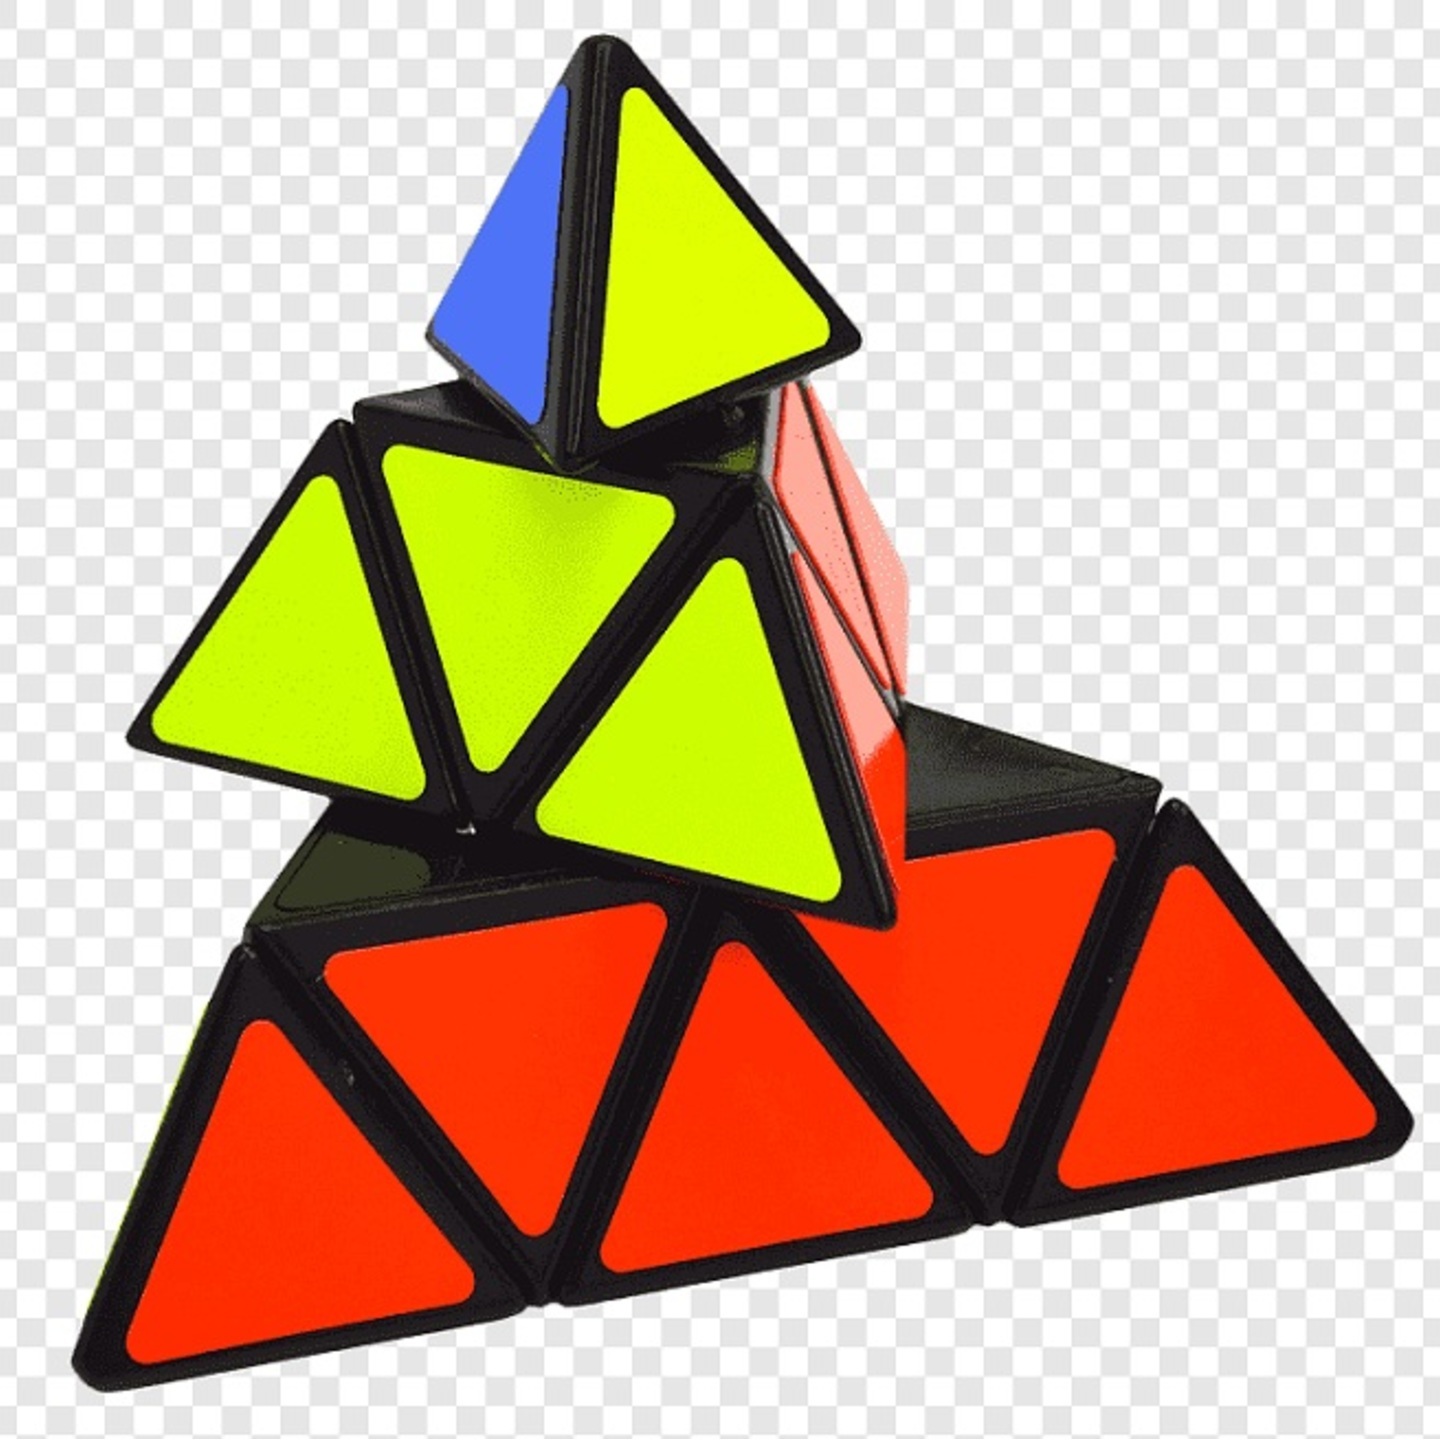 Triangle Pyraminx